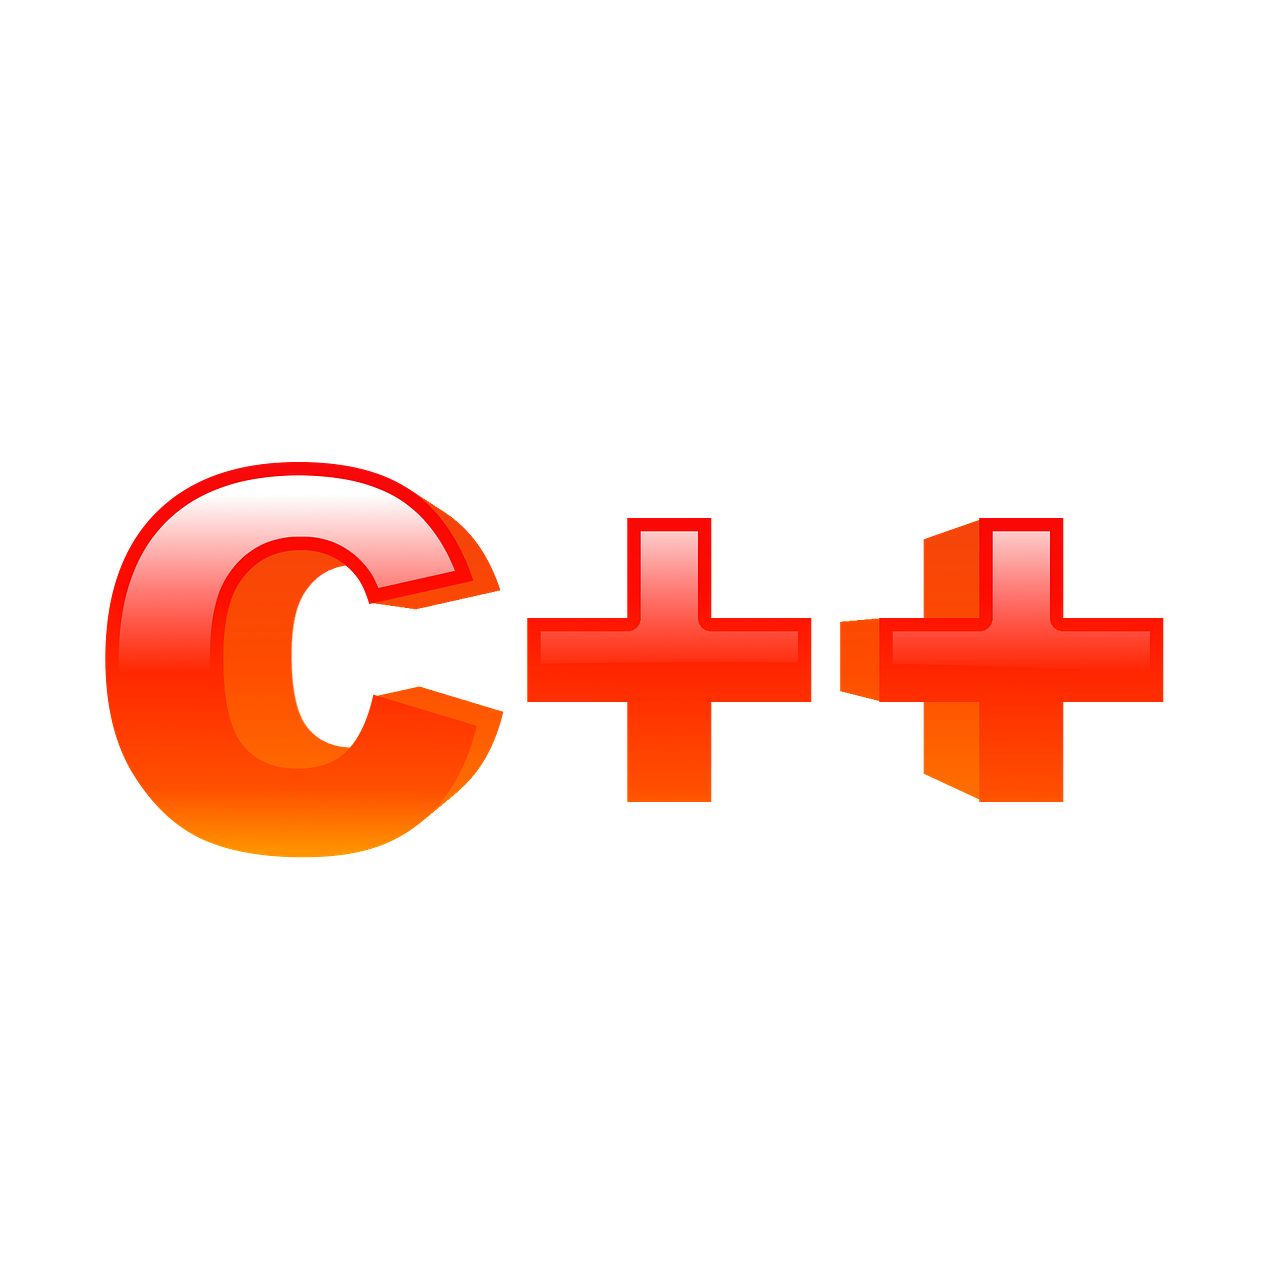 c cplusplus programming language free photo